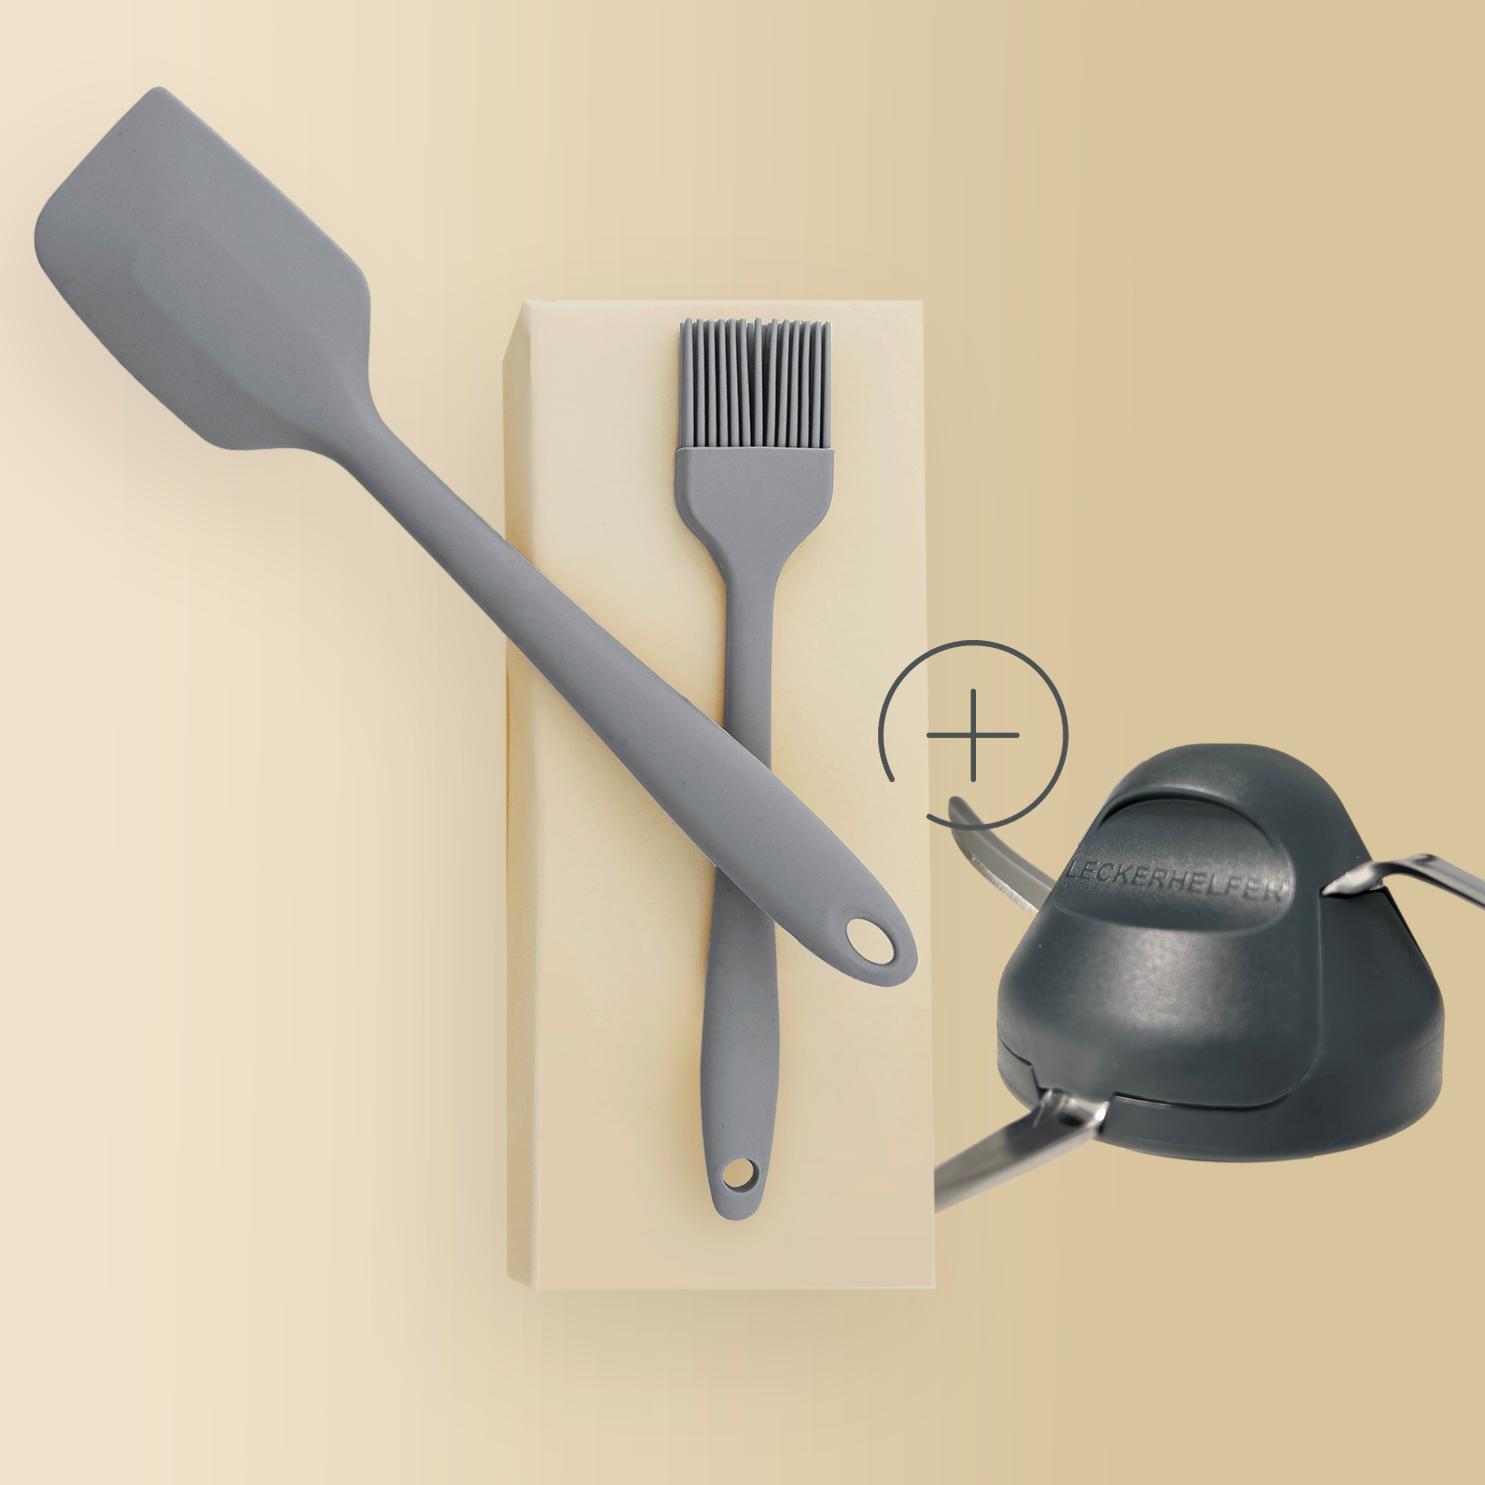 DoughPRO + mixing bowl spatula and brush